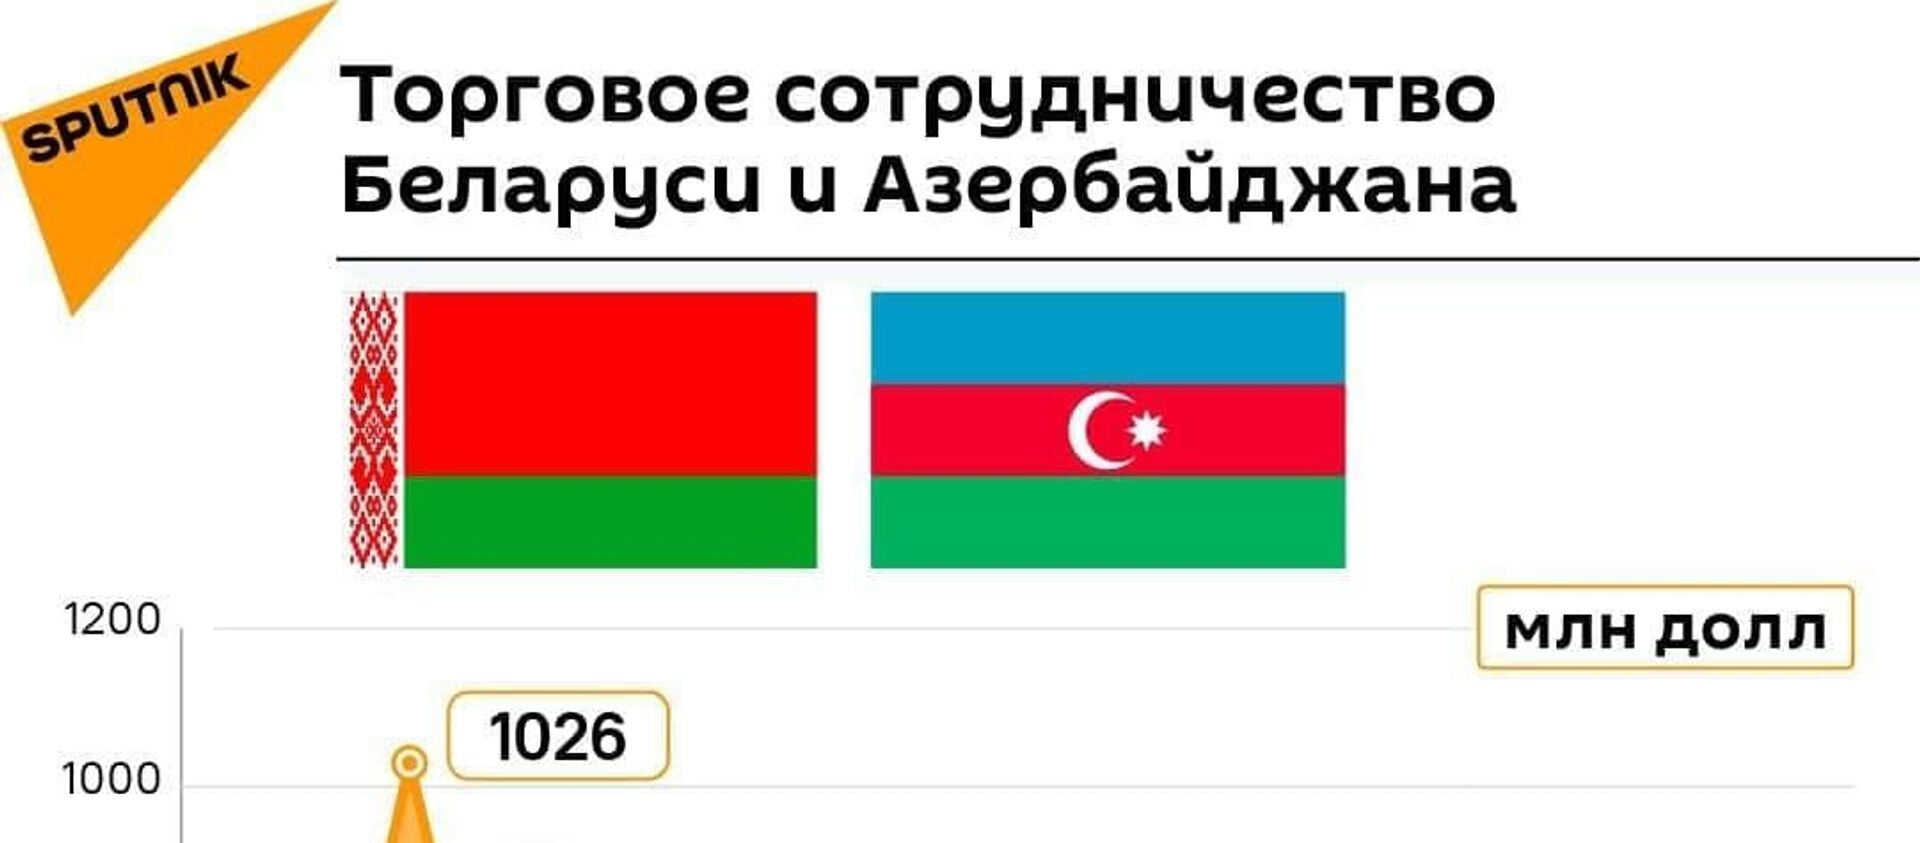 Инфографика: Торговое сотрудничество Беларуси и Азербайджана - Sputnik Азербайджан, 1920, 24.04.2021